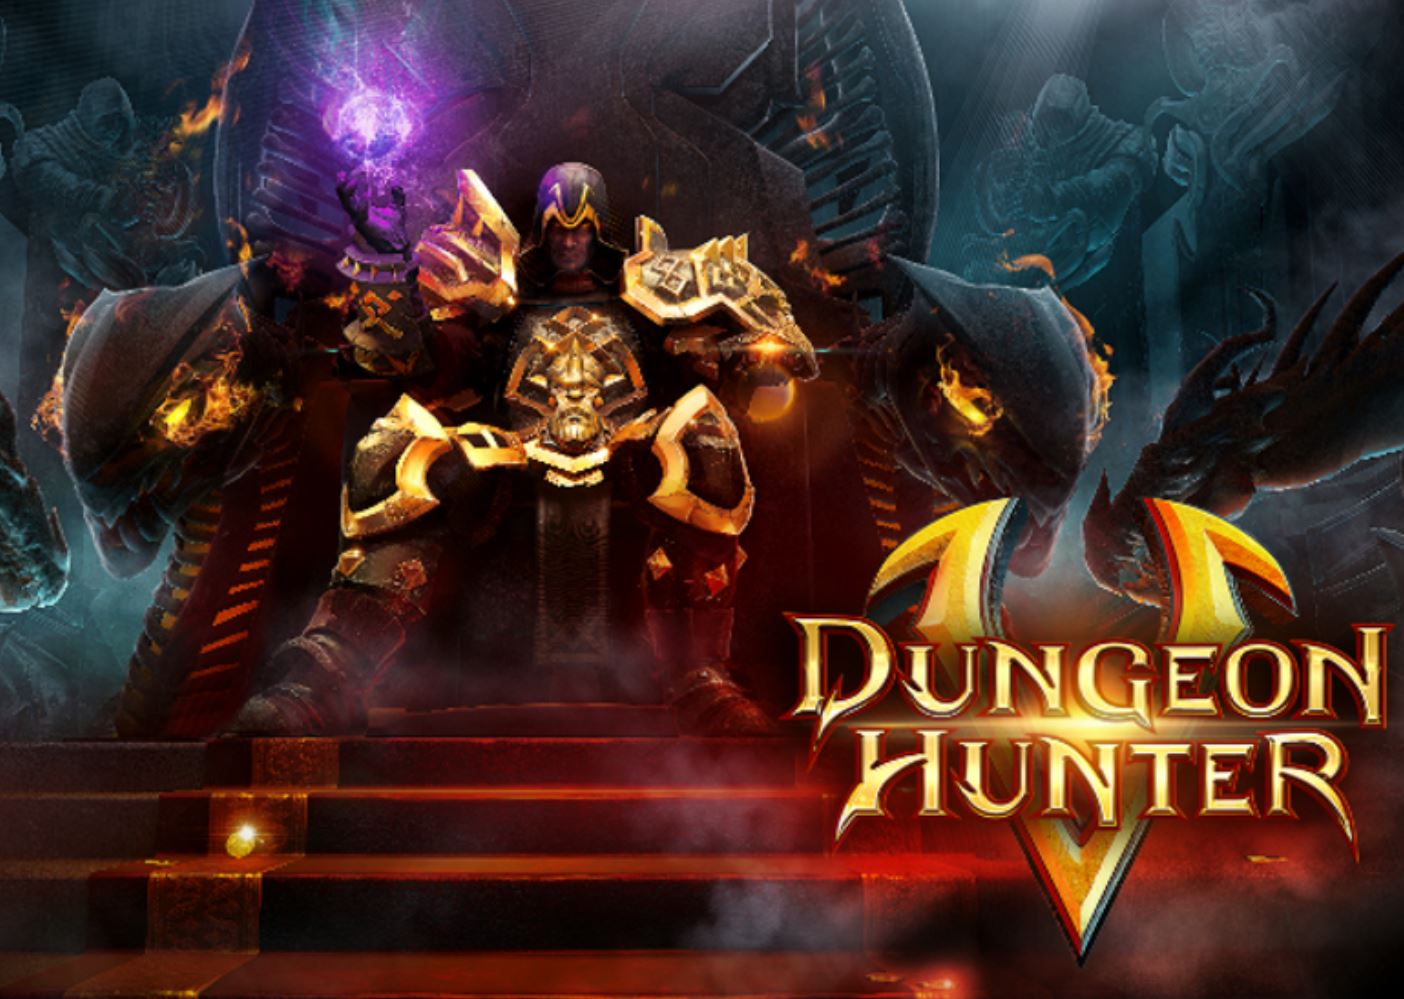 download dungeon hunter 5 pc